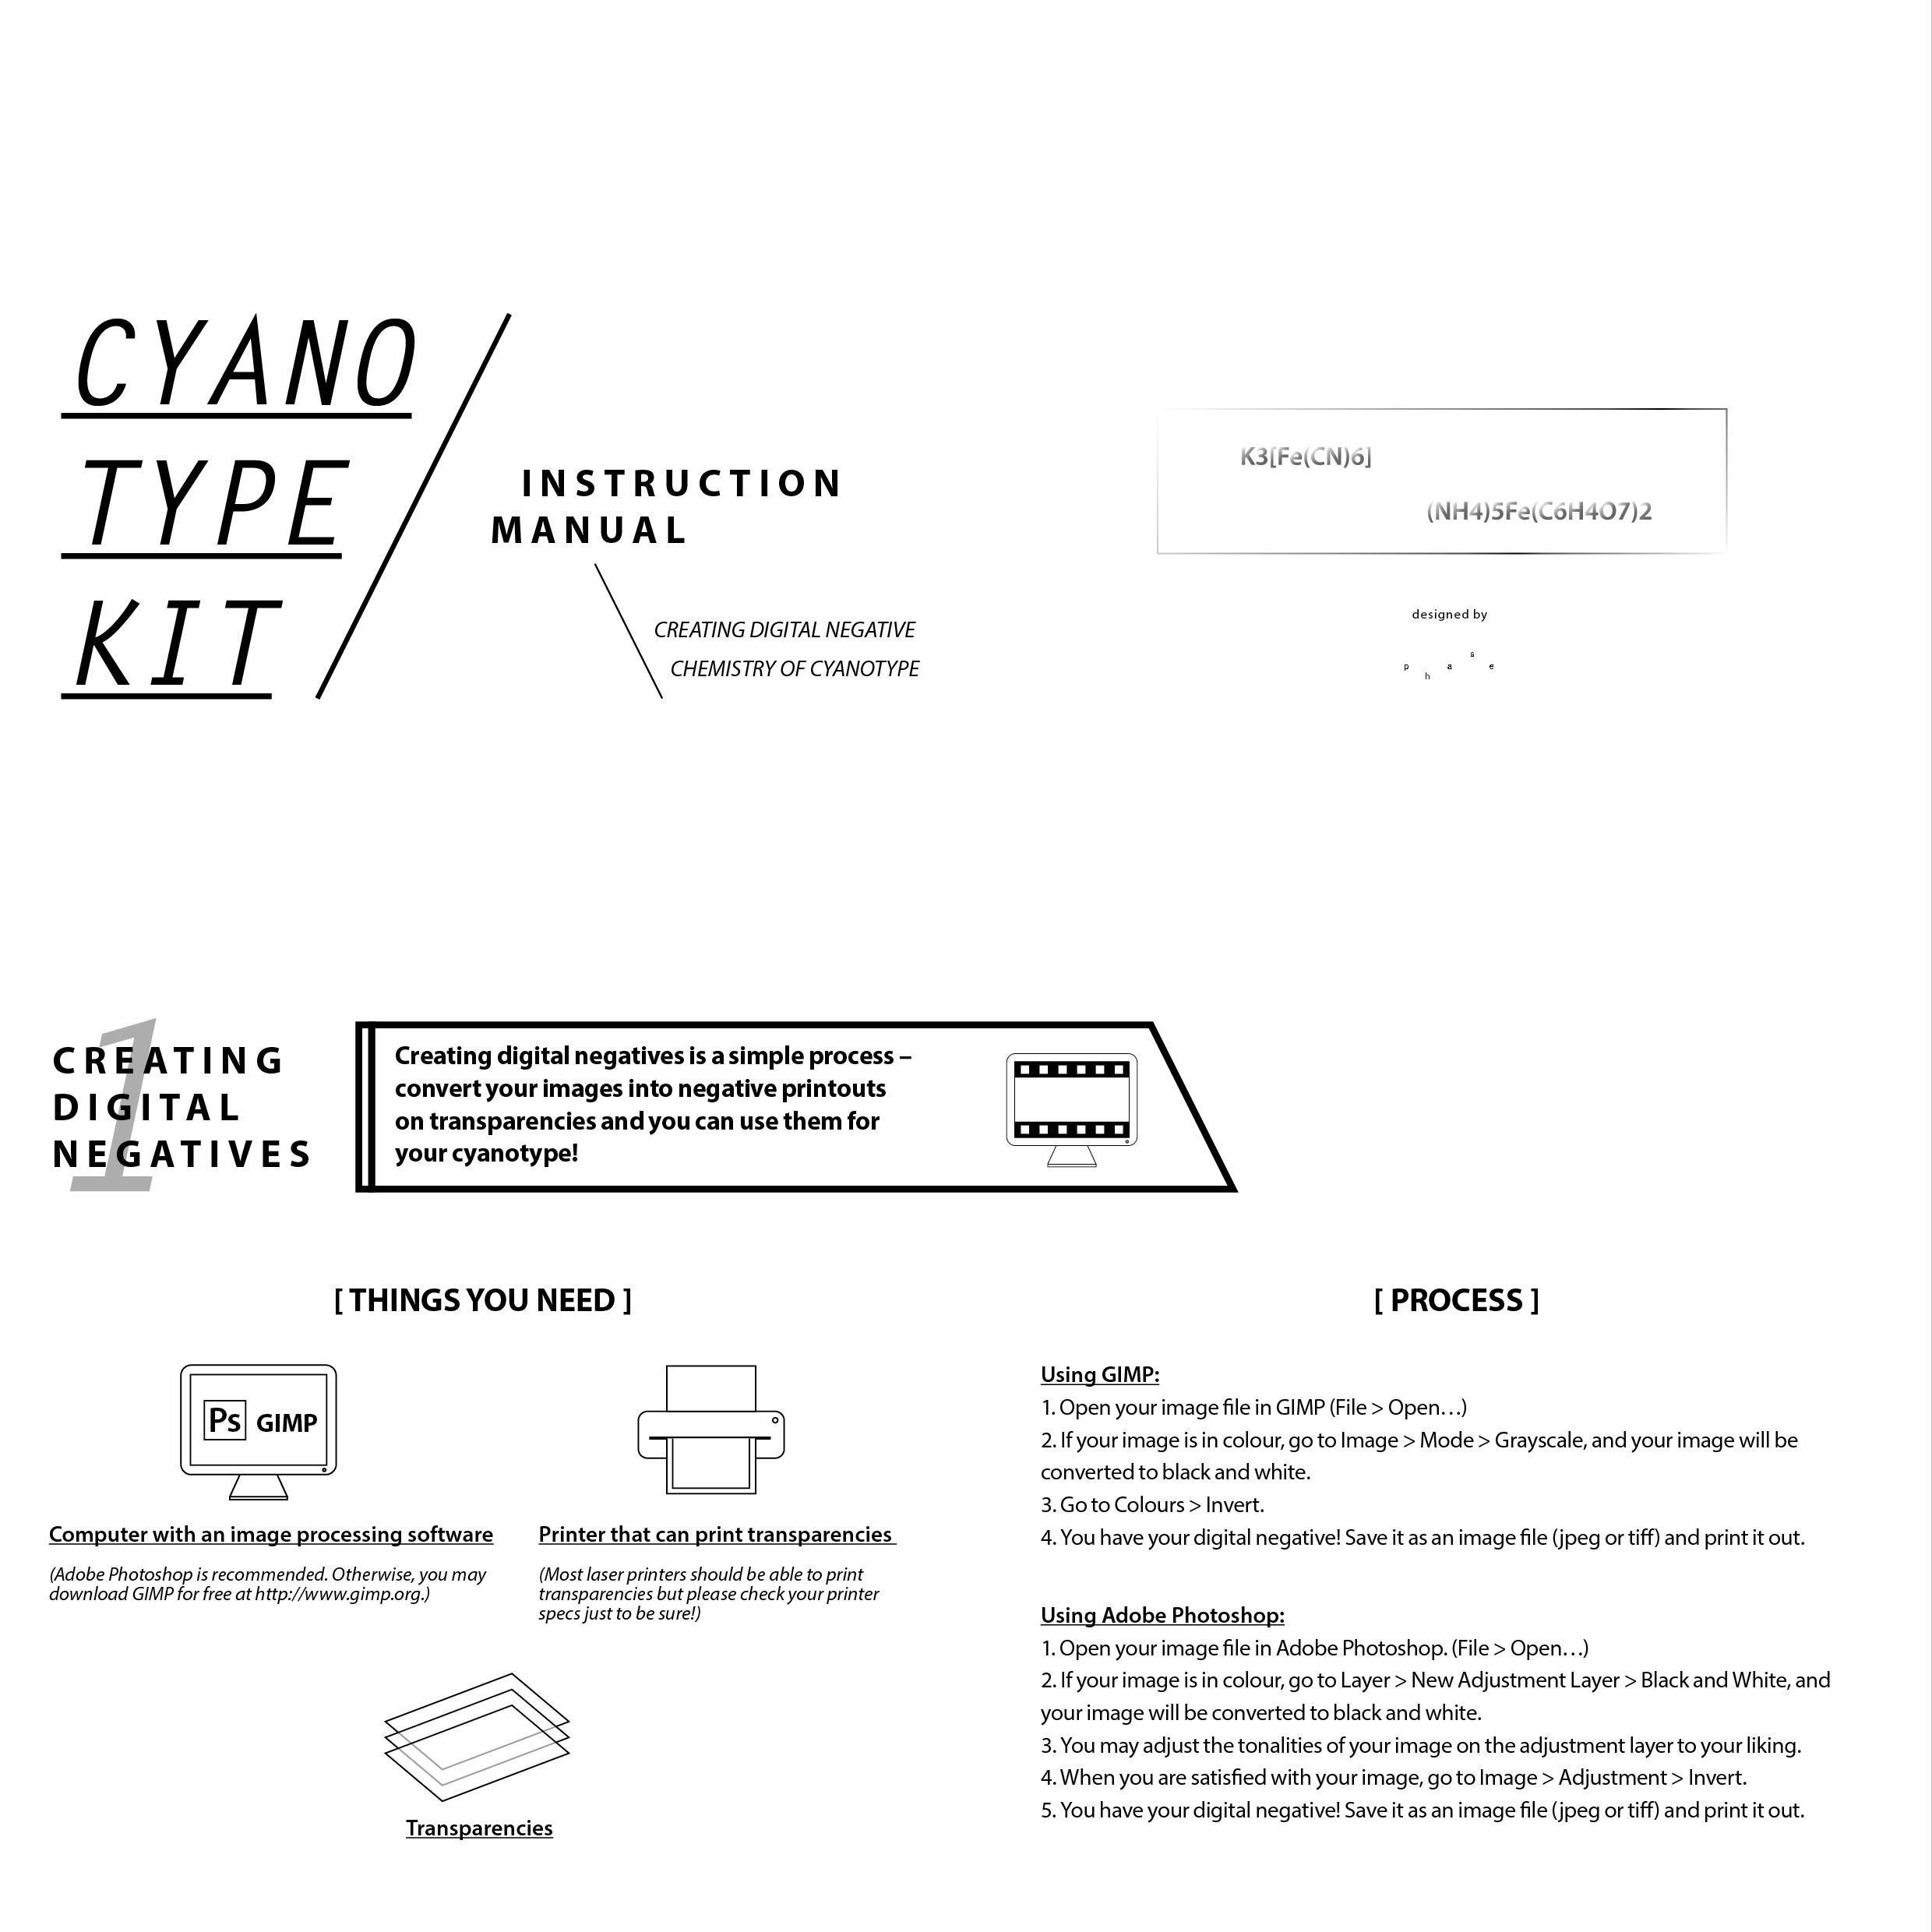 CYANOTYPE KIT_Manual1.jpg